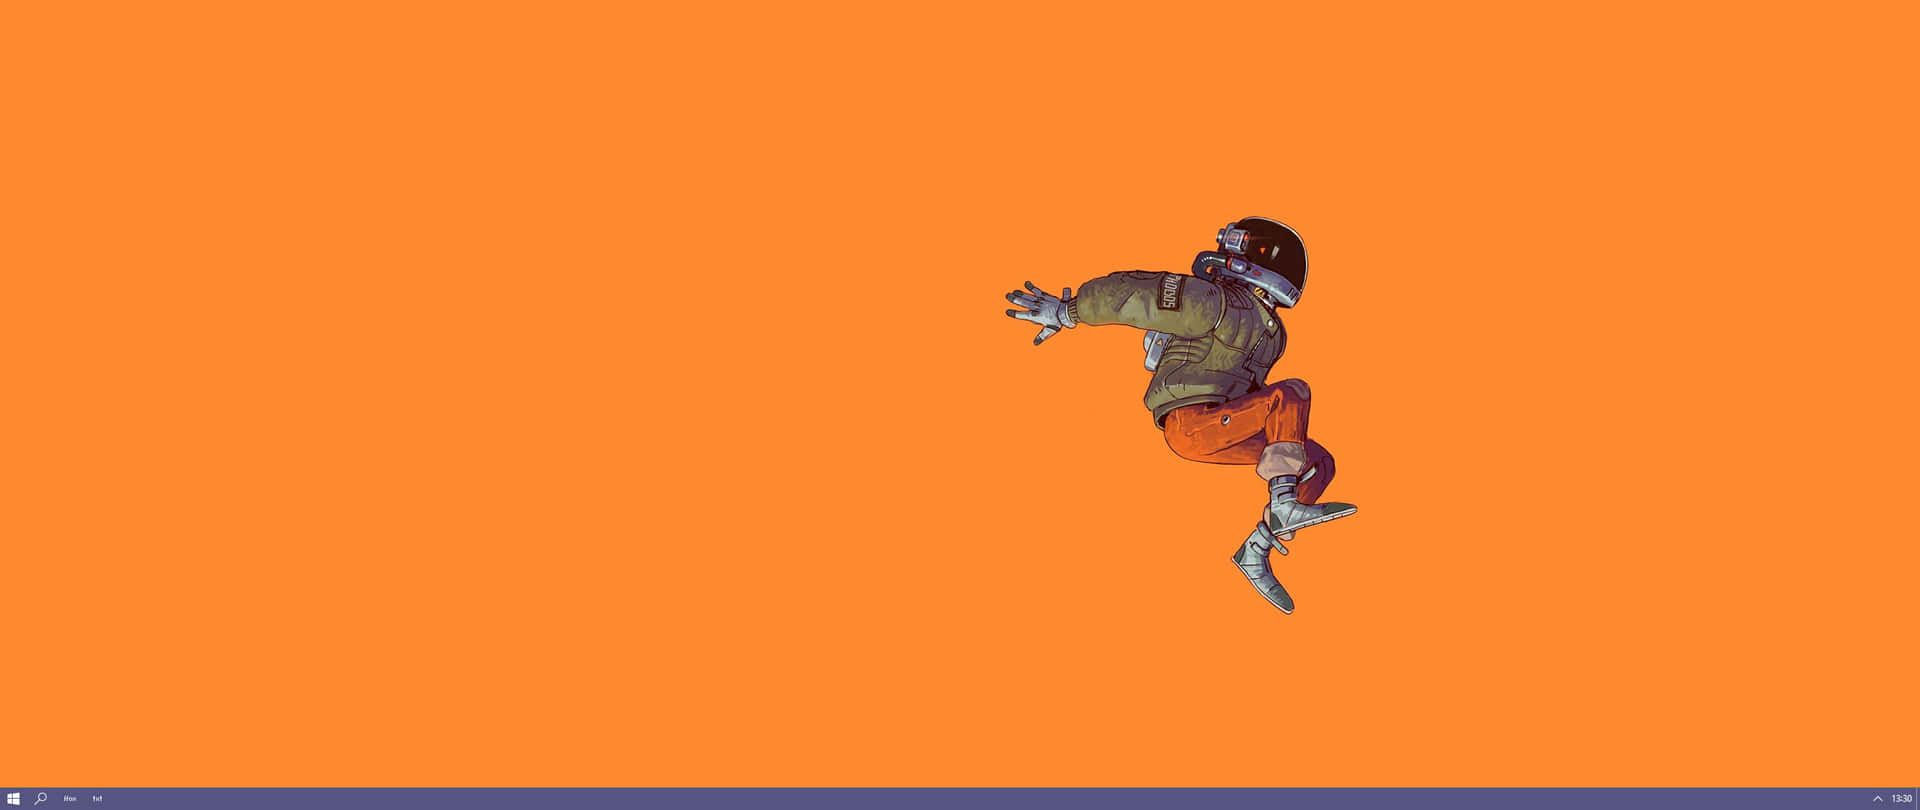 A Skateboarder Jumping On An Orange Background Wallpaper